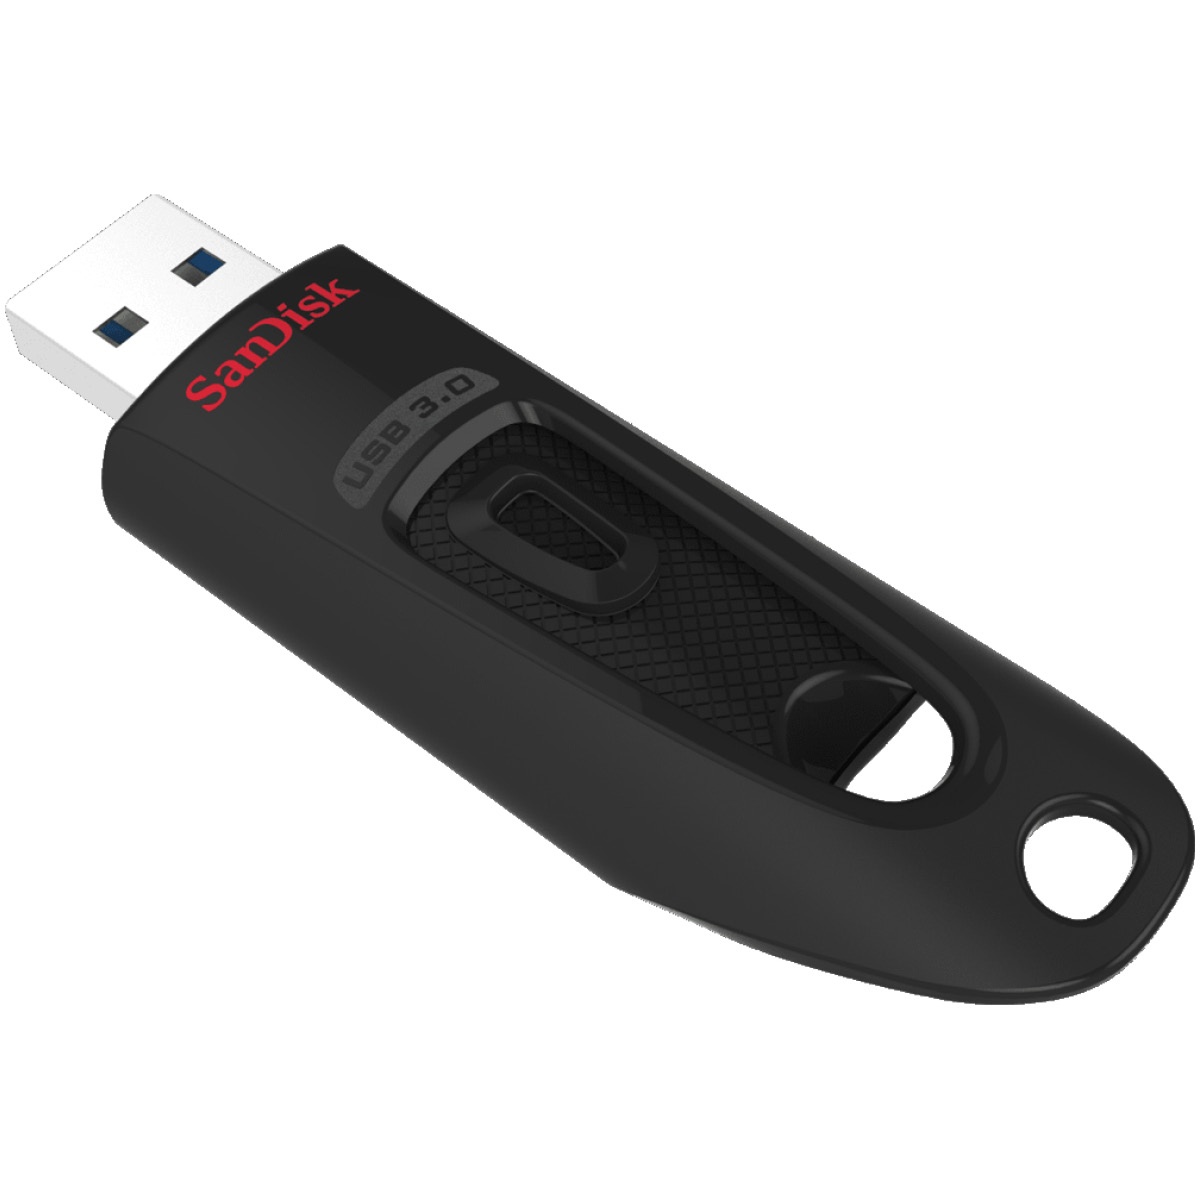 SanDisk 64 GB Ultra USB 3.0 Cruzer